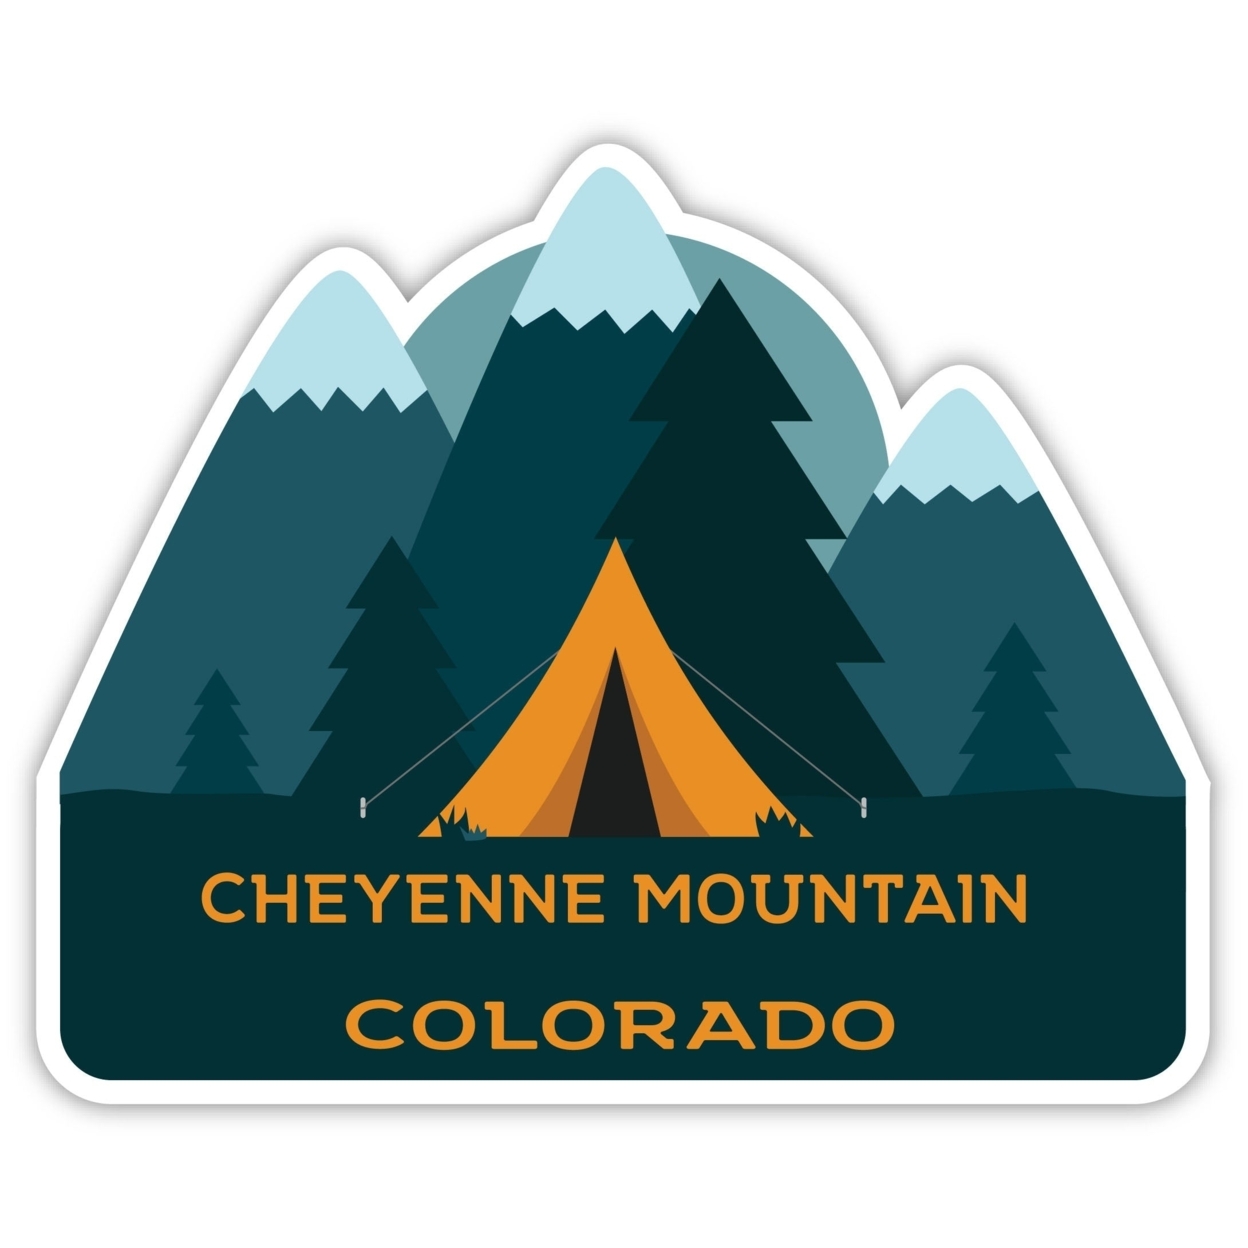 Cheyenne Mountain Colorado Souvenir Decorative Stickers (Choose Theme And Size) - 4-Pack, 8-Inch, Bear